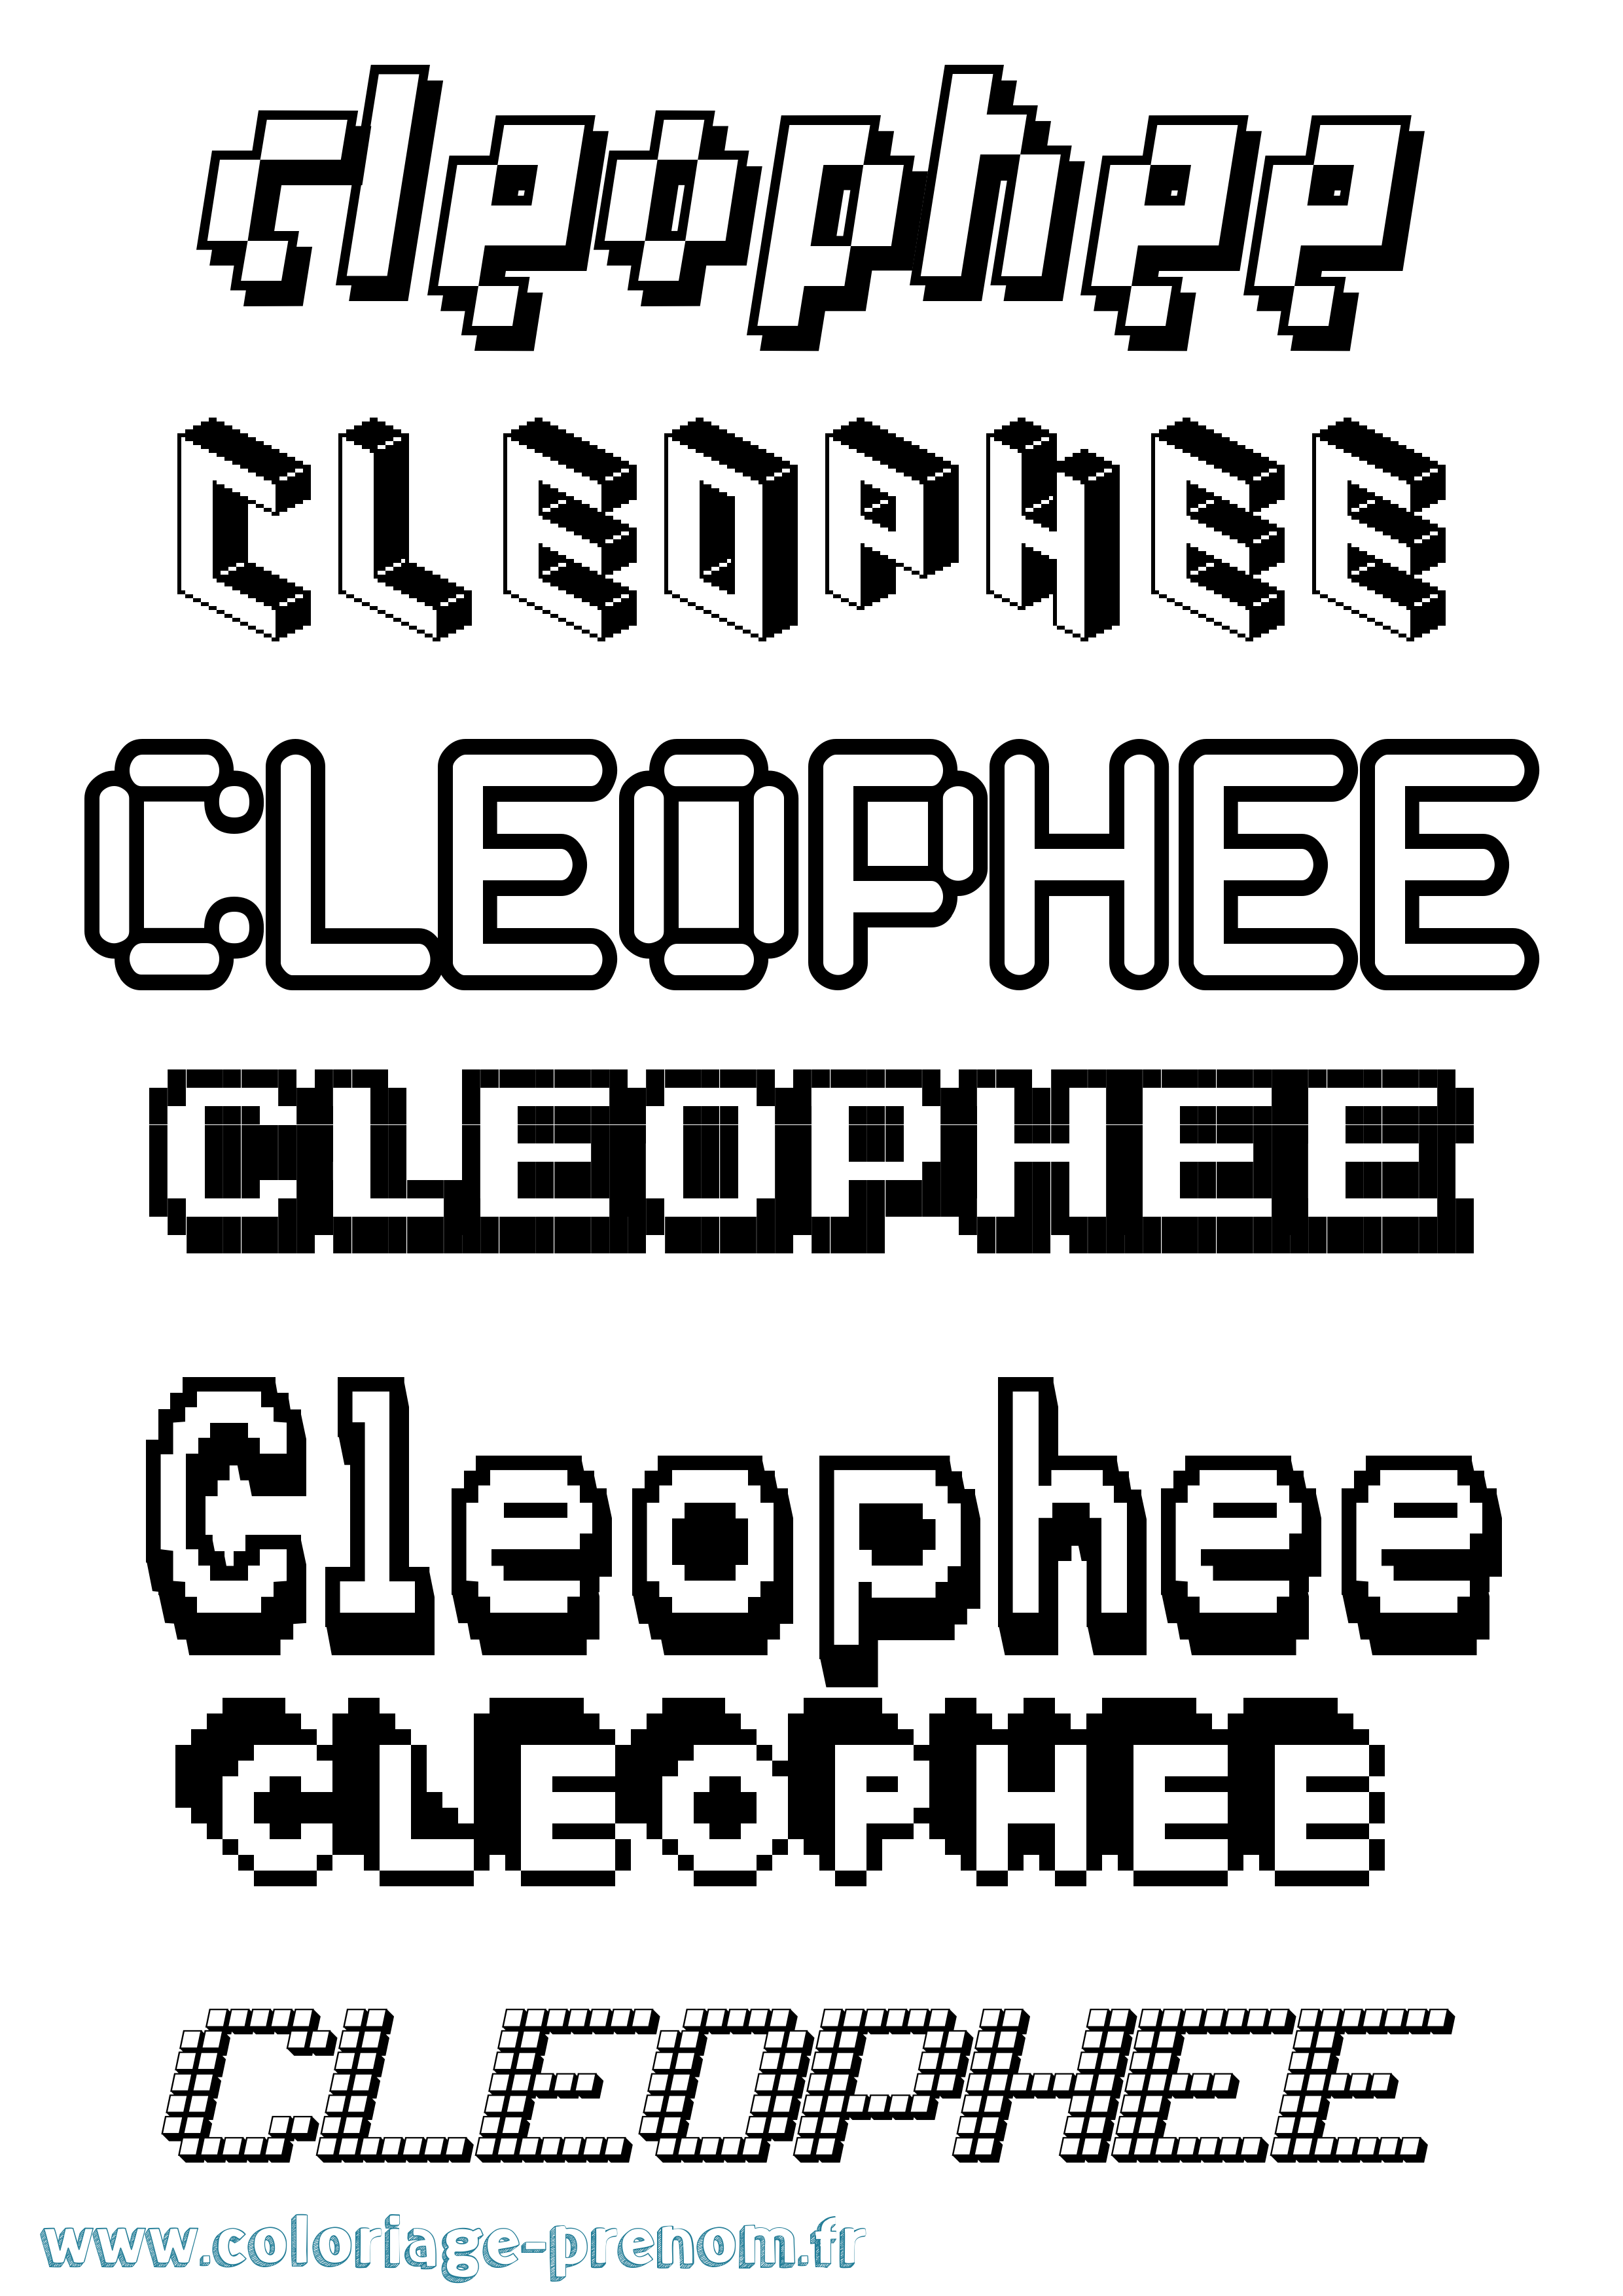 Coloriage prénom Cleophee